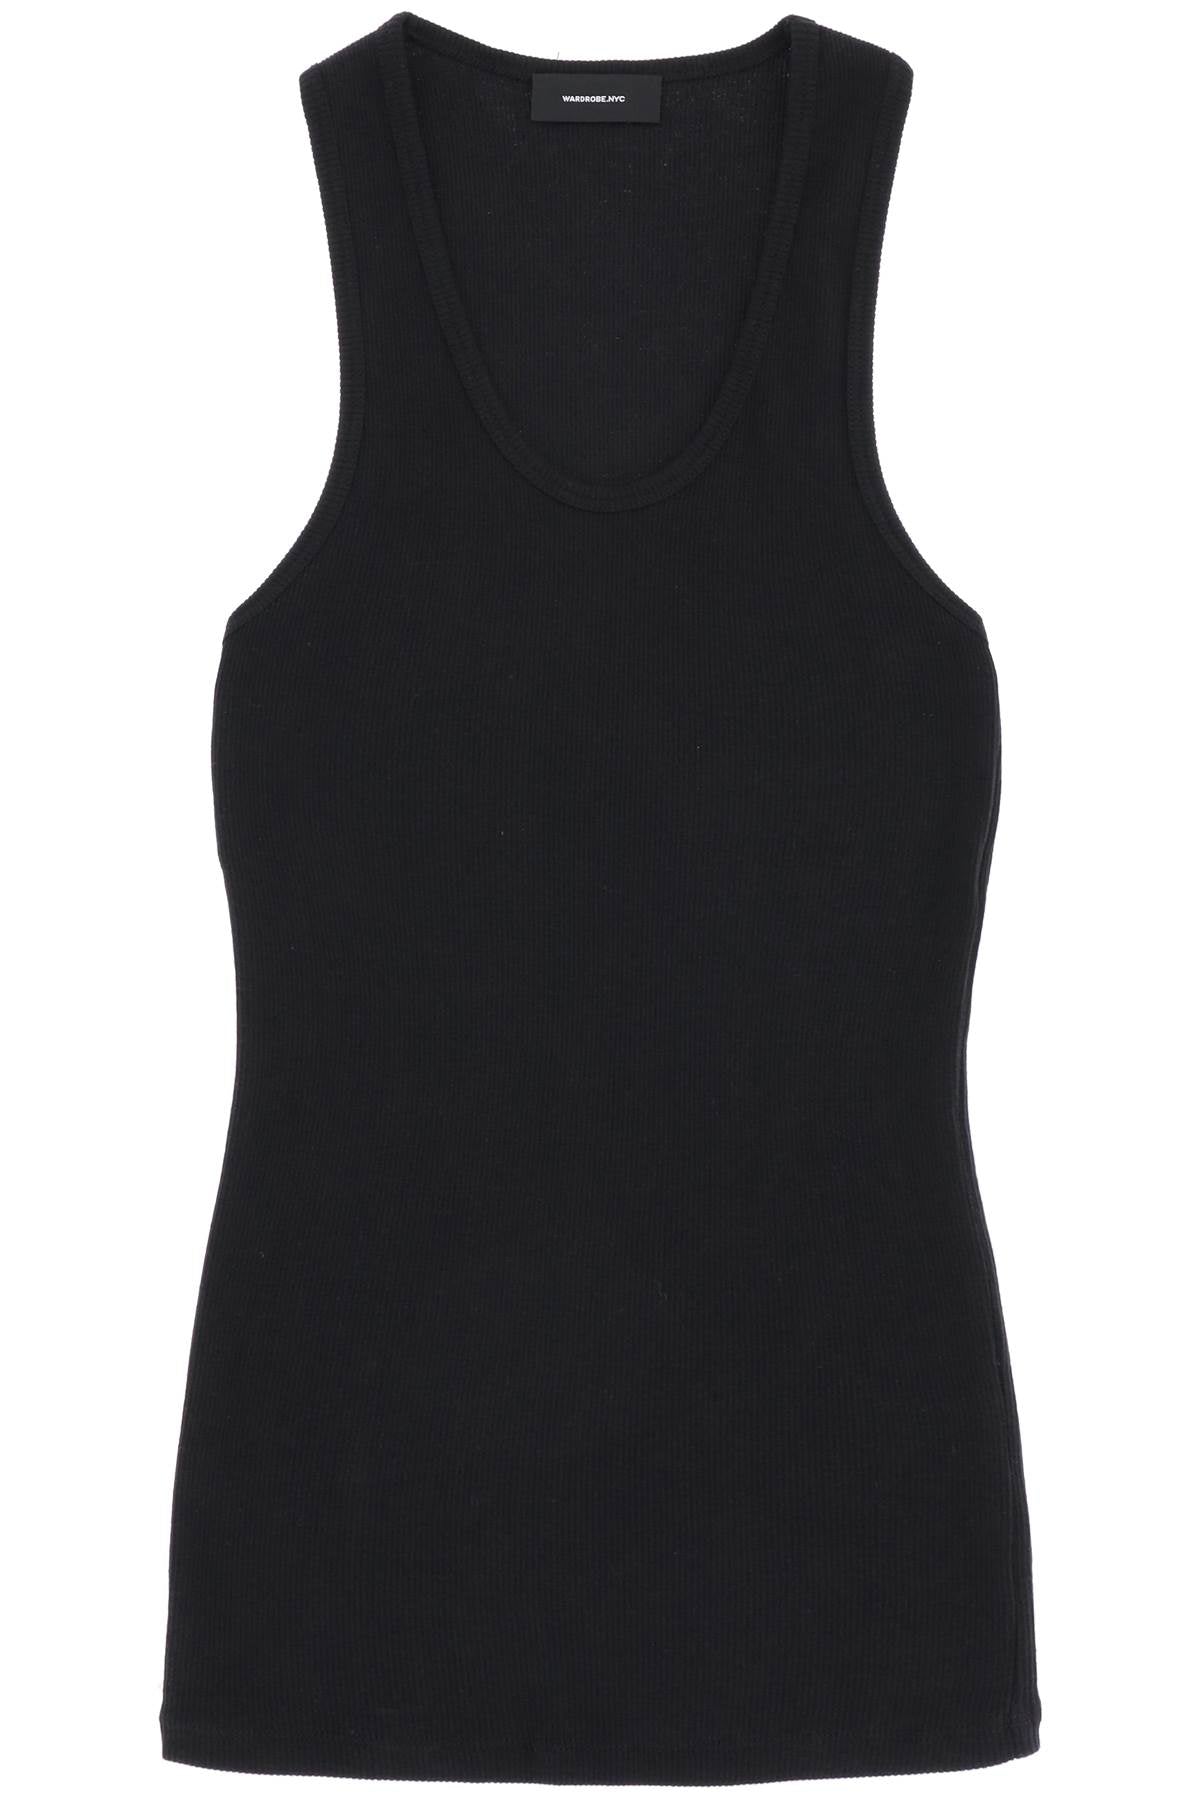 Wardrobe.nyc ribbed sleeveless top with W1016R04 BLACK